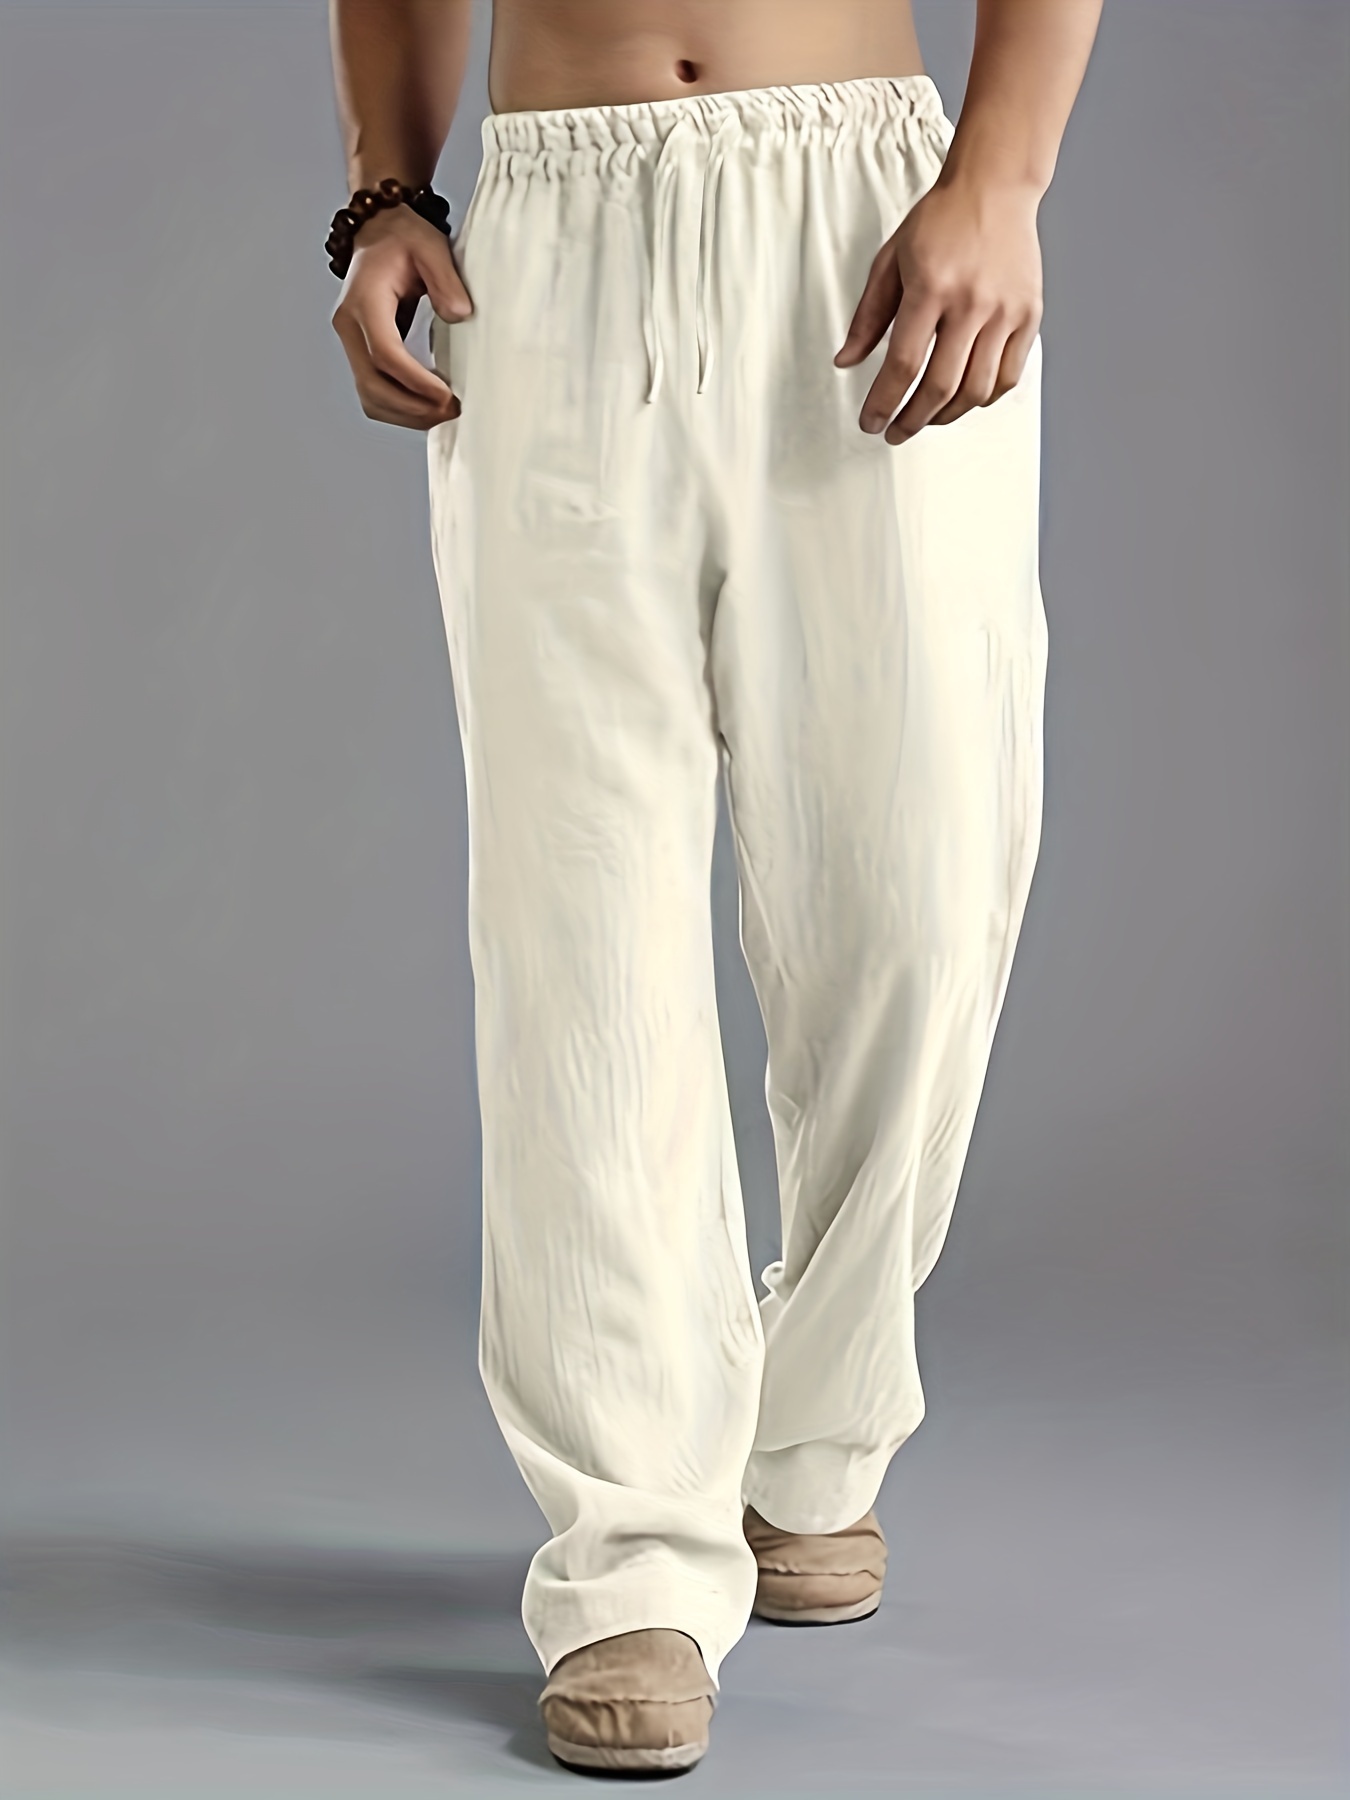 Men's Linen Pants, Summer Cotton Linen Casual Pants, Elastic Waist